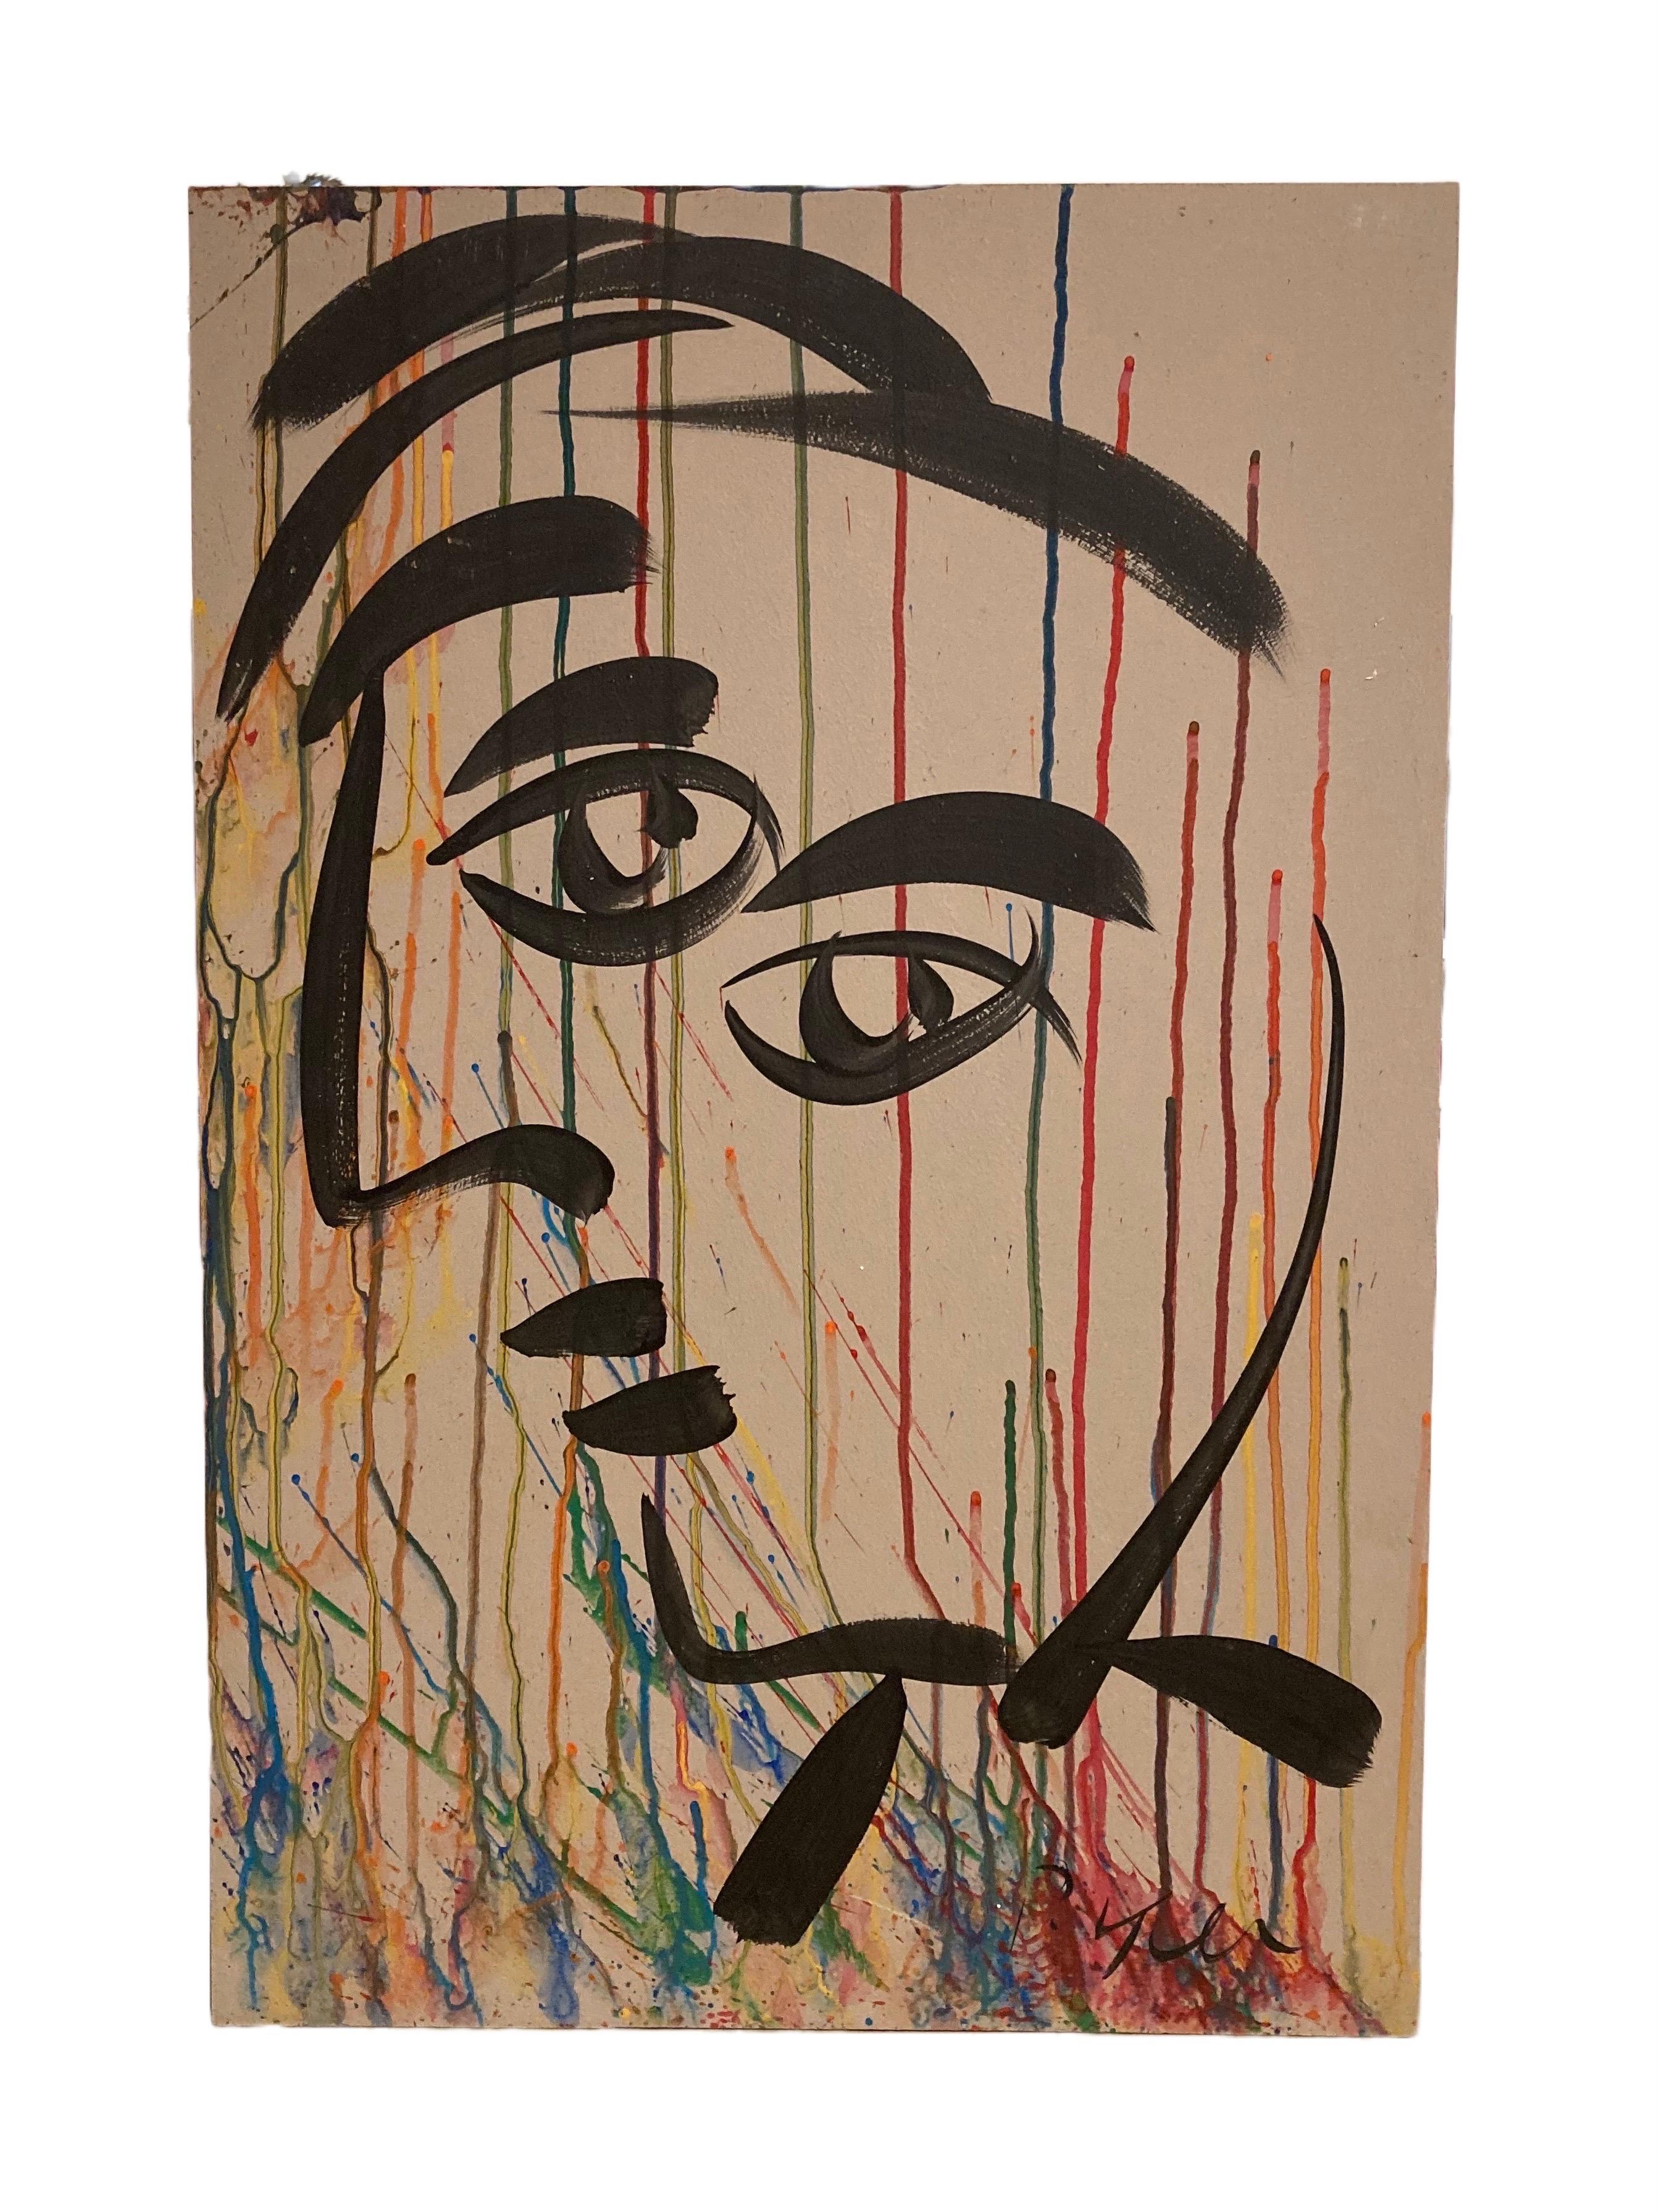 Buntes abstraktes Porträtgemälde auf Karton-  Regenbogen-Showers von Peter Keil